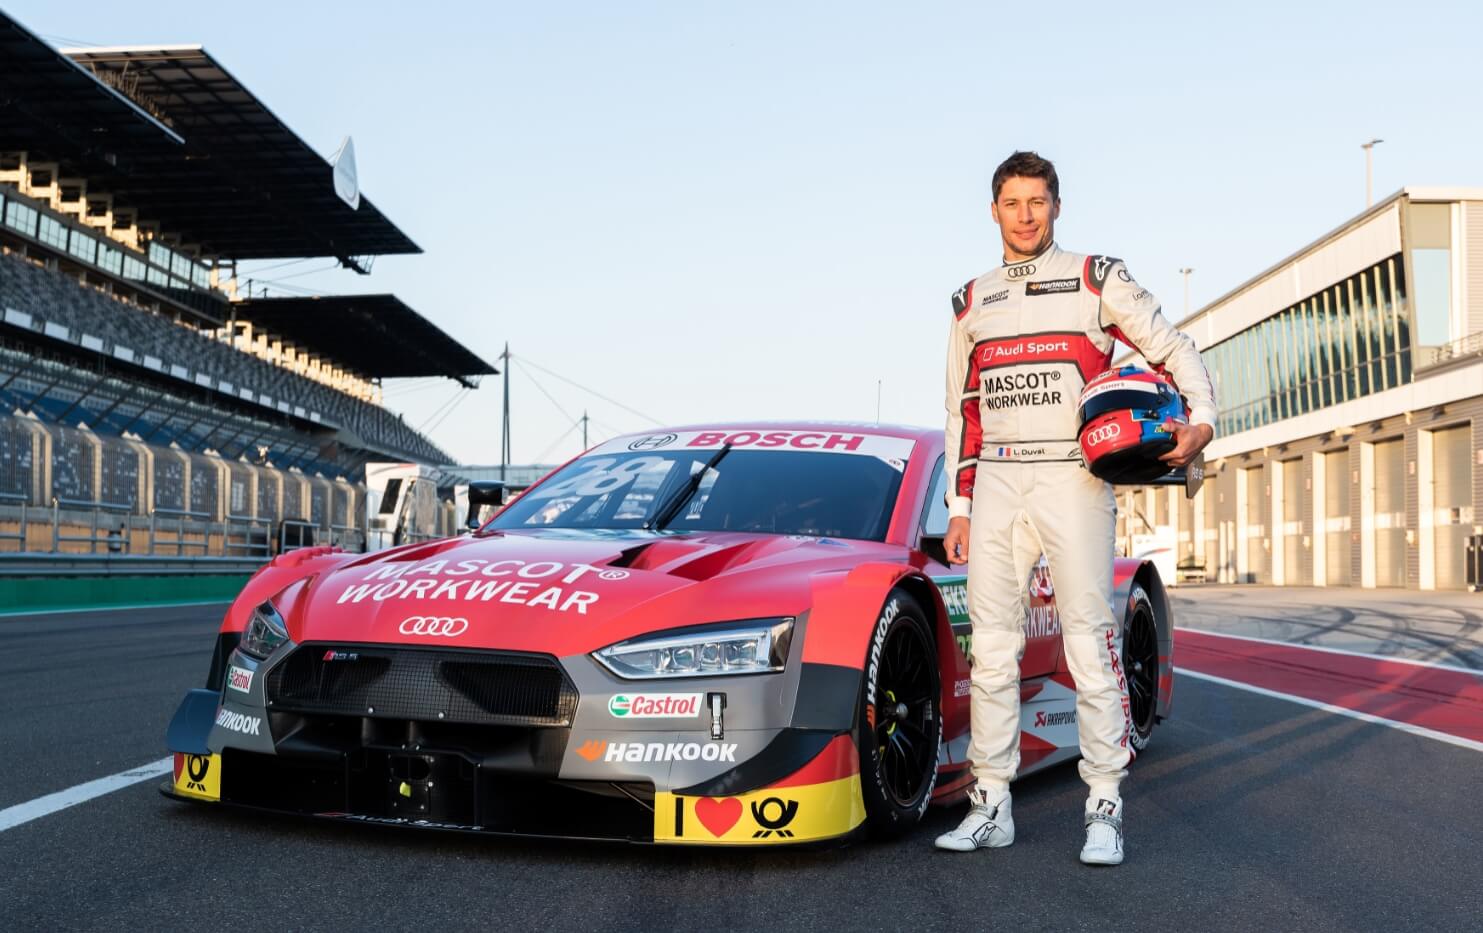 2019 - MASCOT WORKWEAR Audi RS 5 DTM - Audi Sport - race car - Loïc Duval